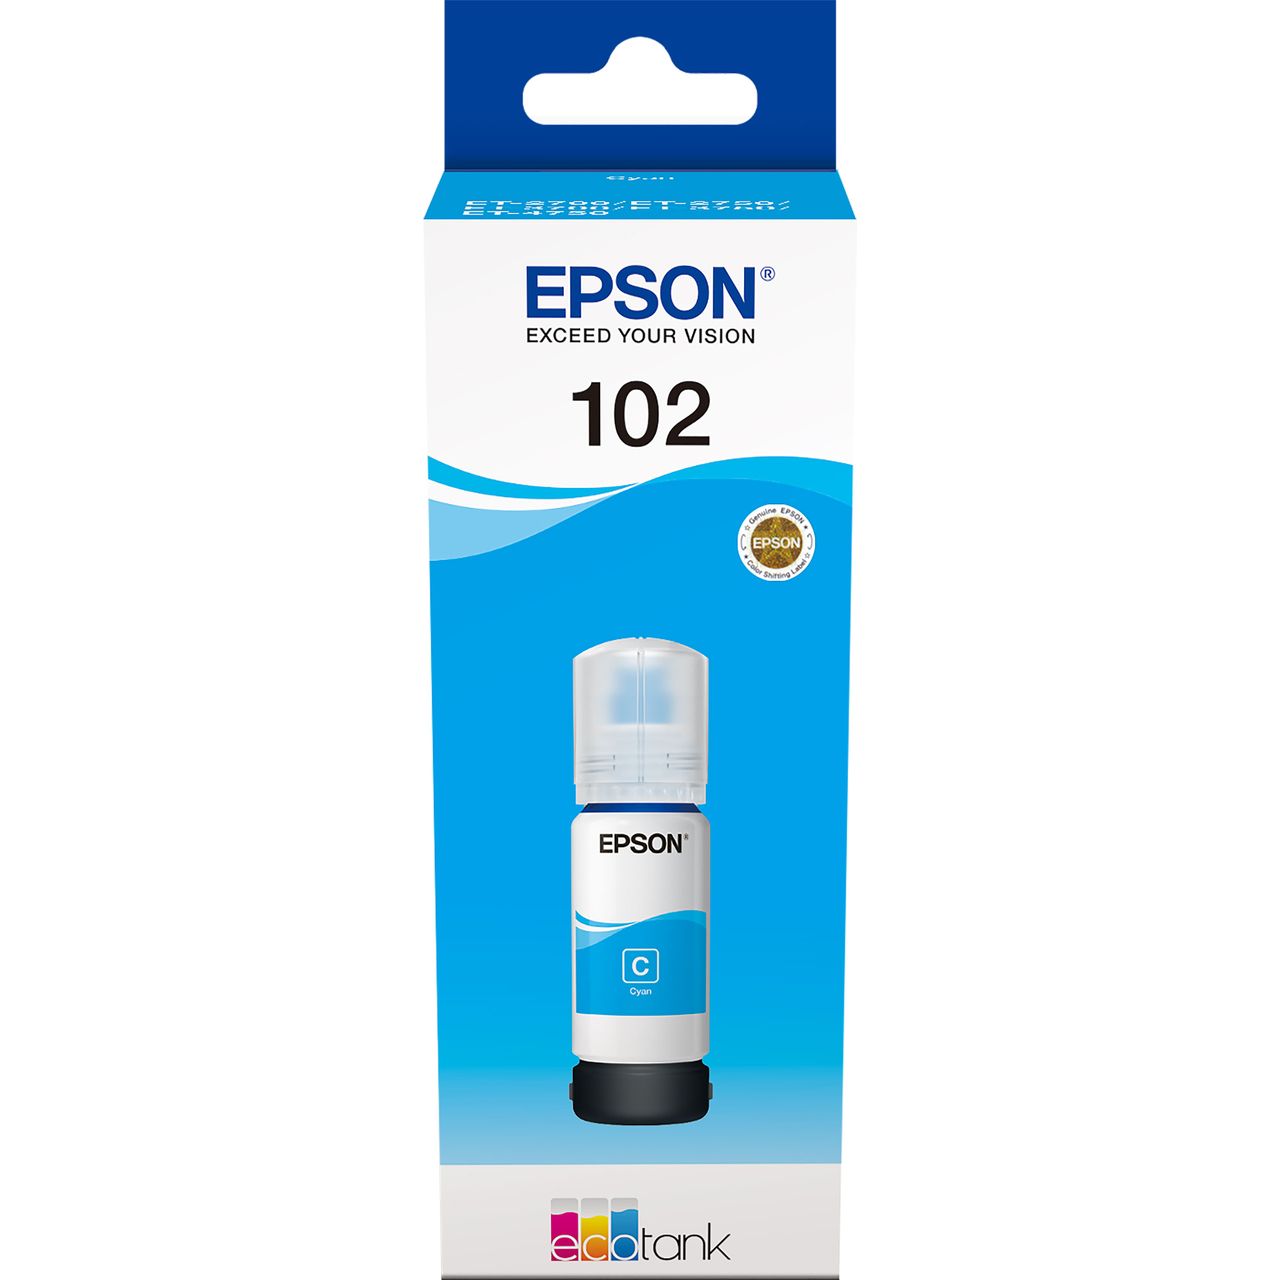 Epson 102 EcoTank Cyan Ink Bottle Review